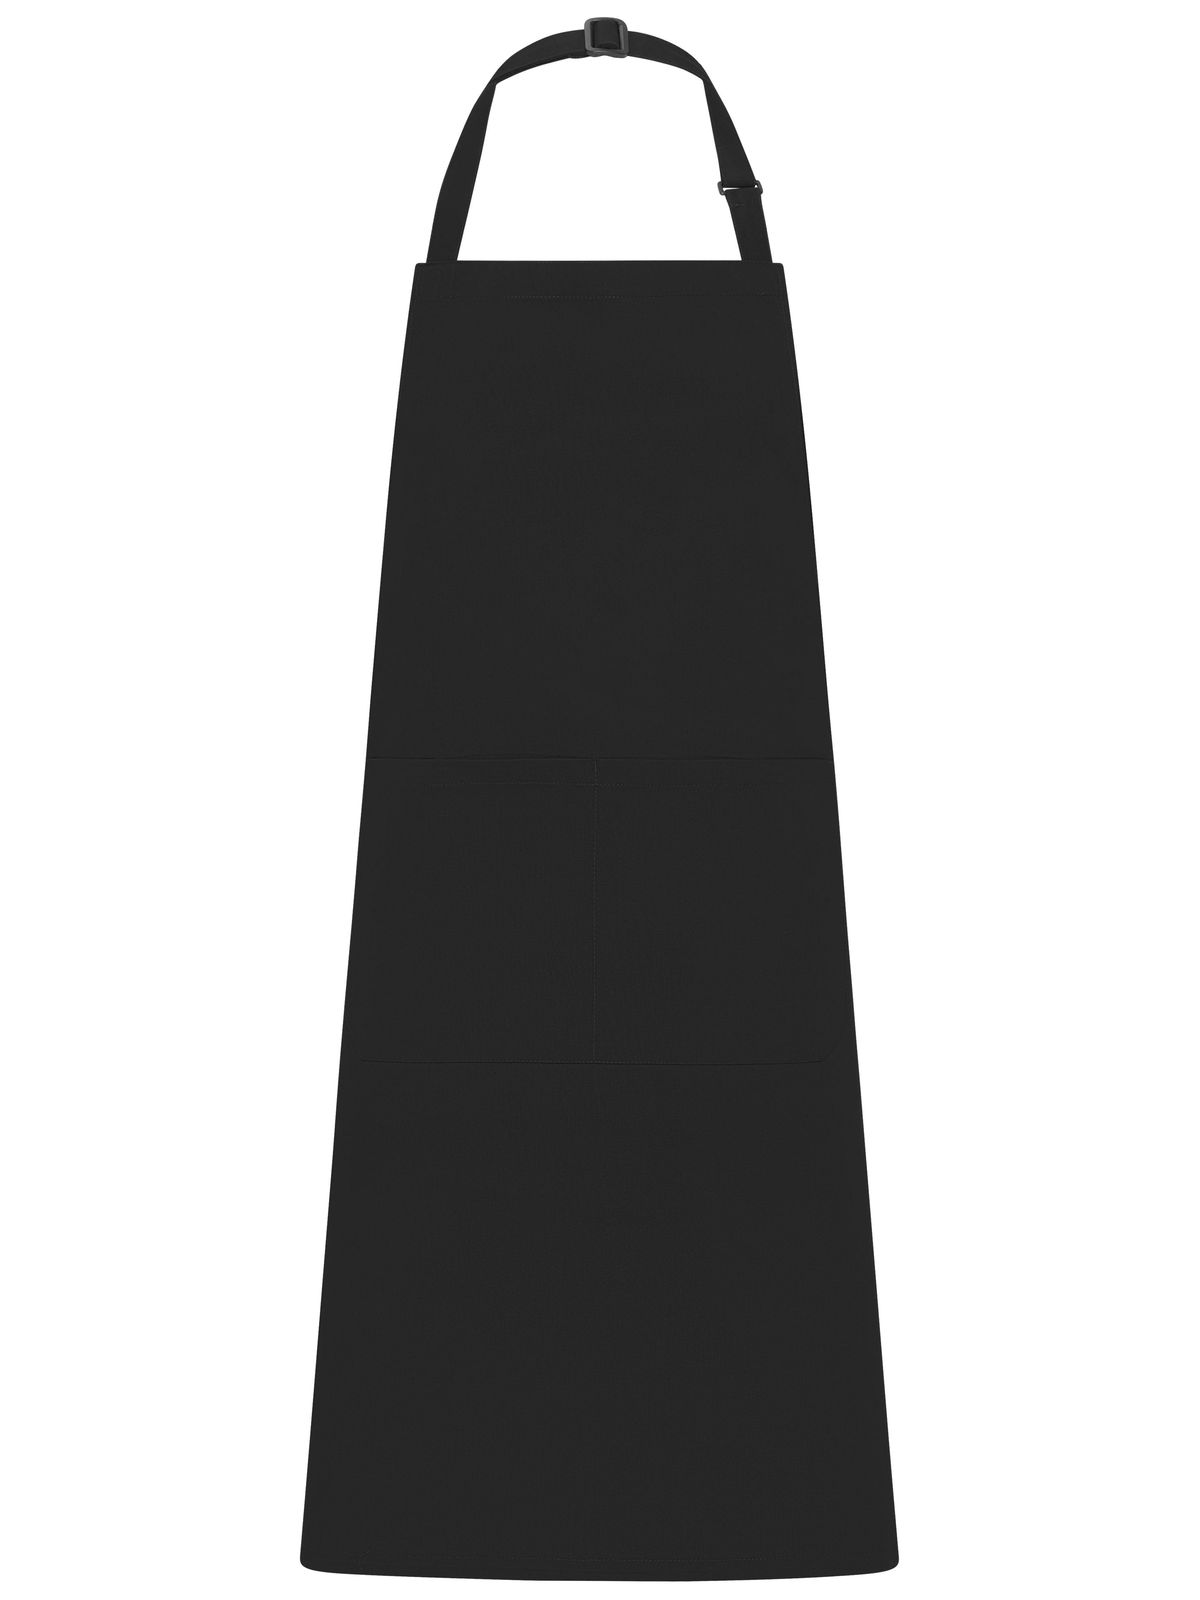 apron-with-bib-black.webp